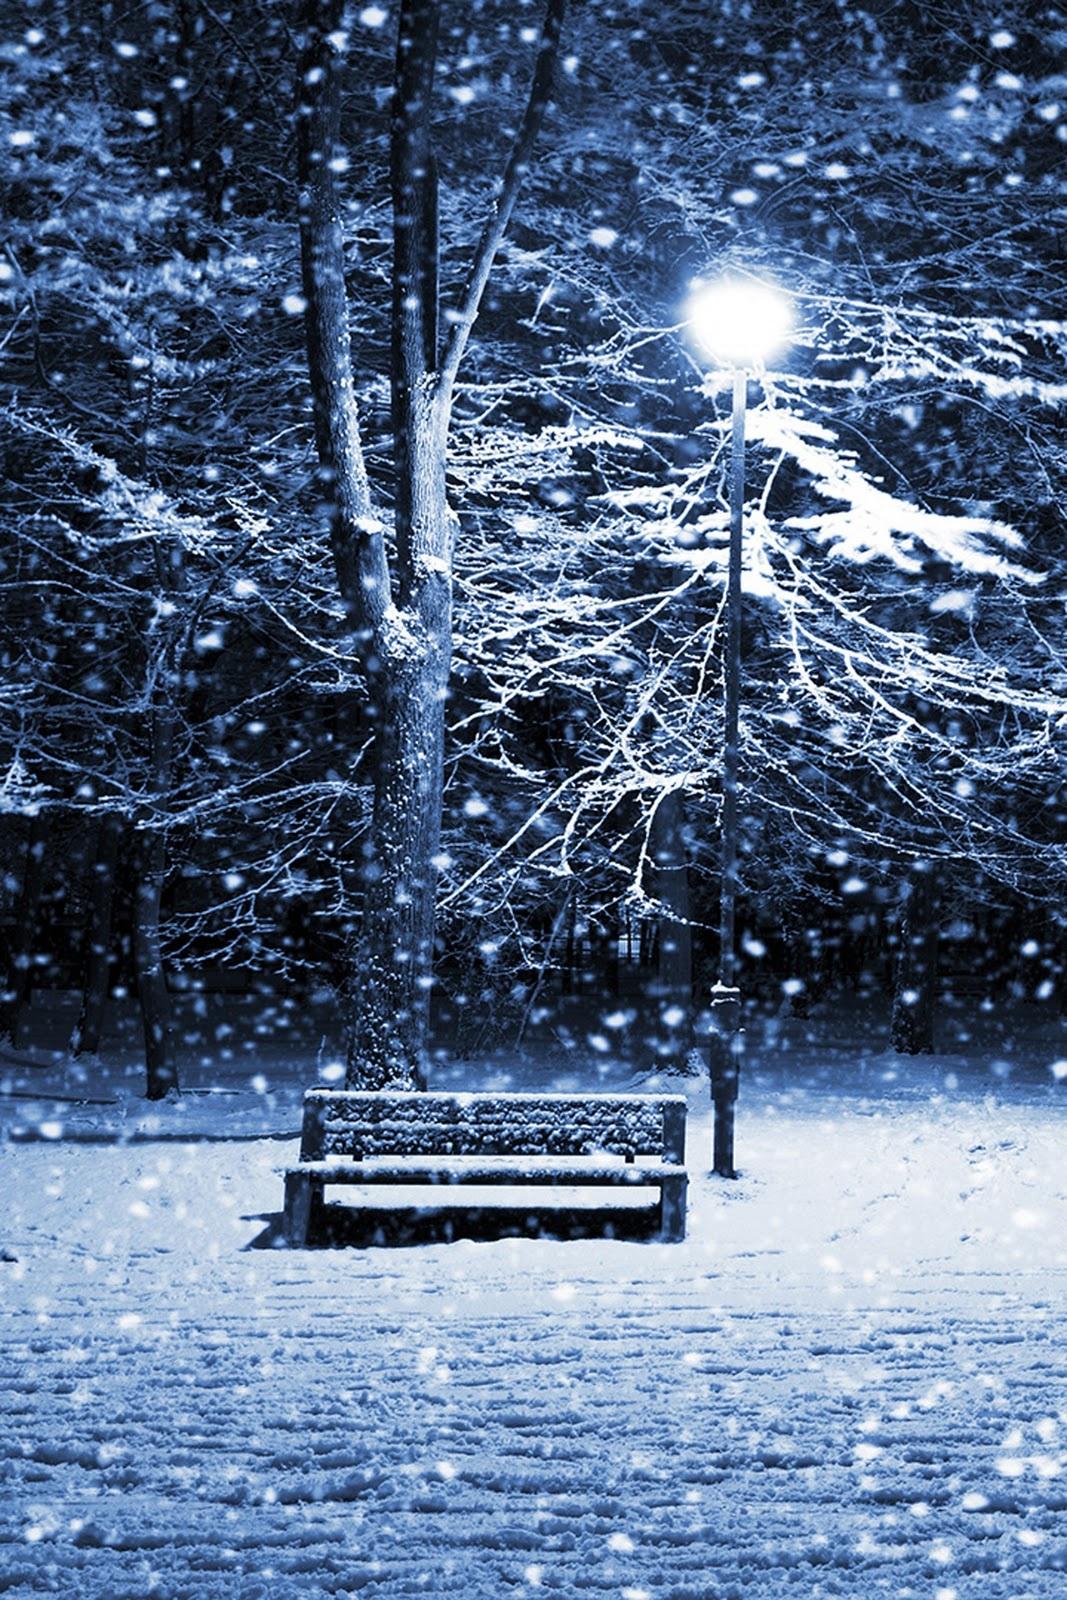 Snowy night iphone wallpaper Photo 36316847